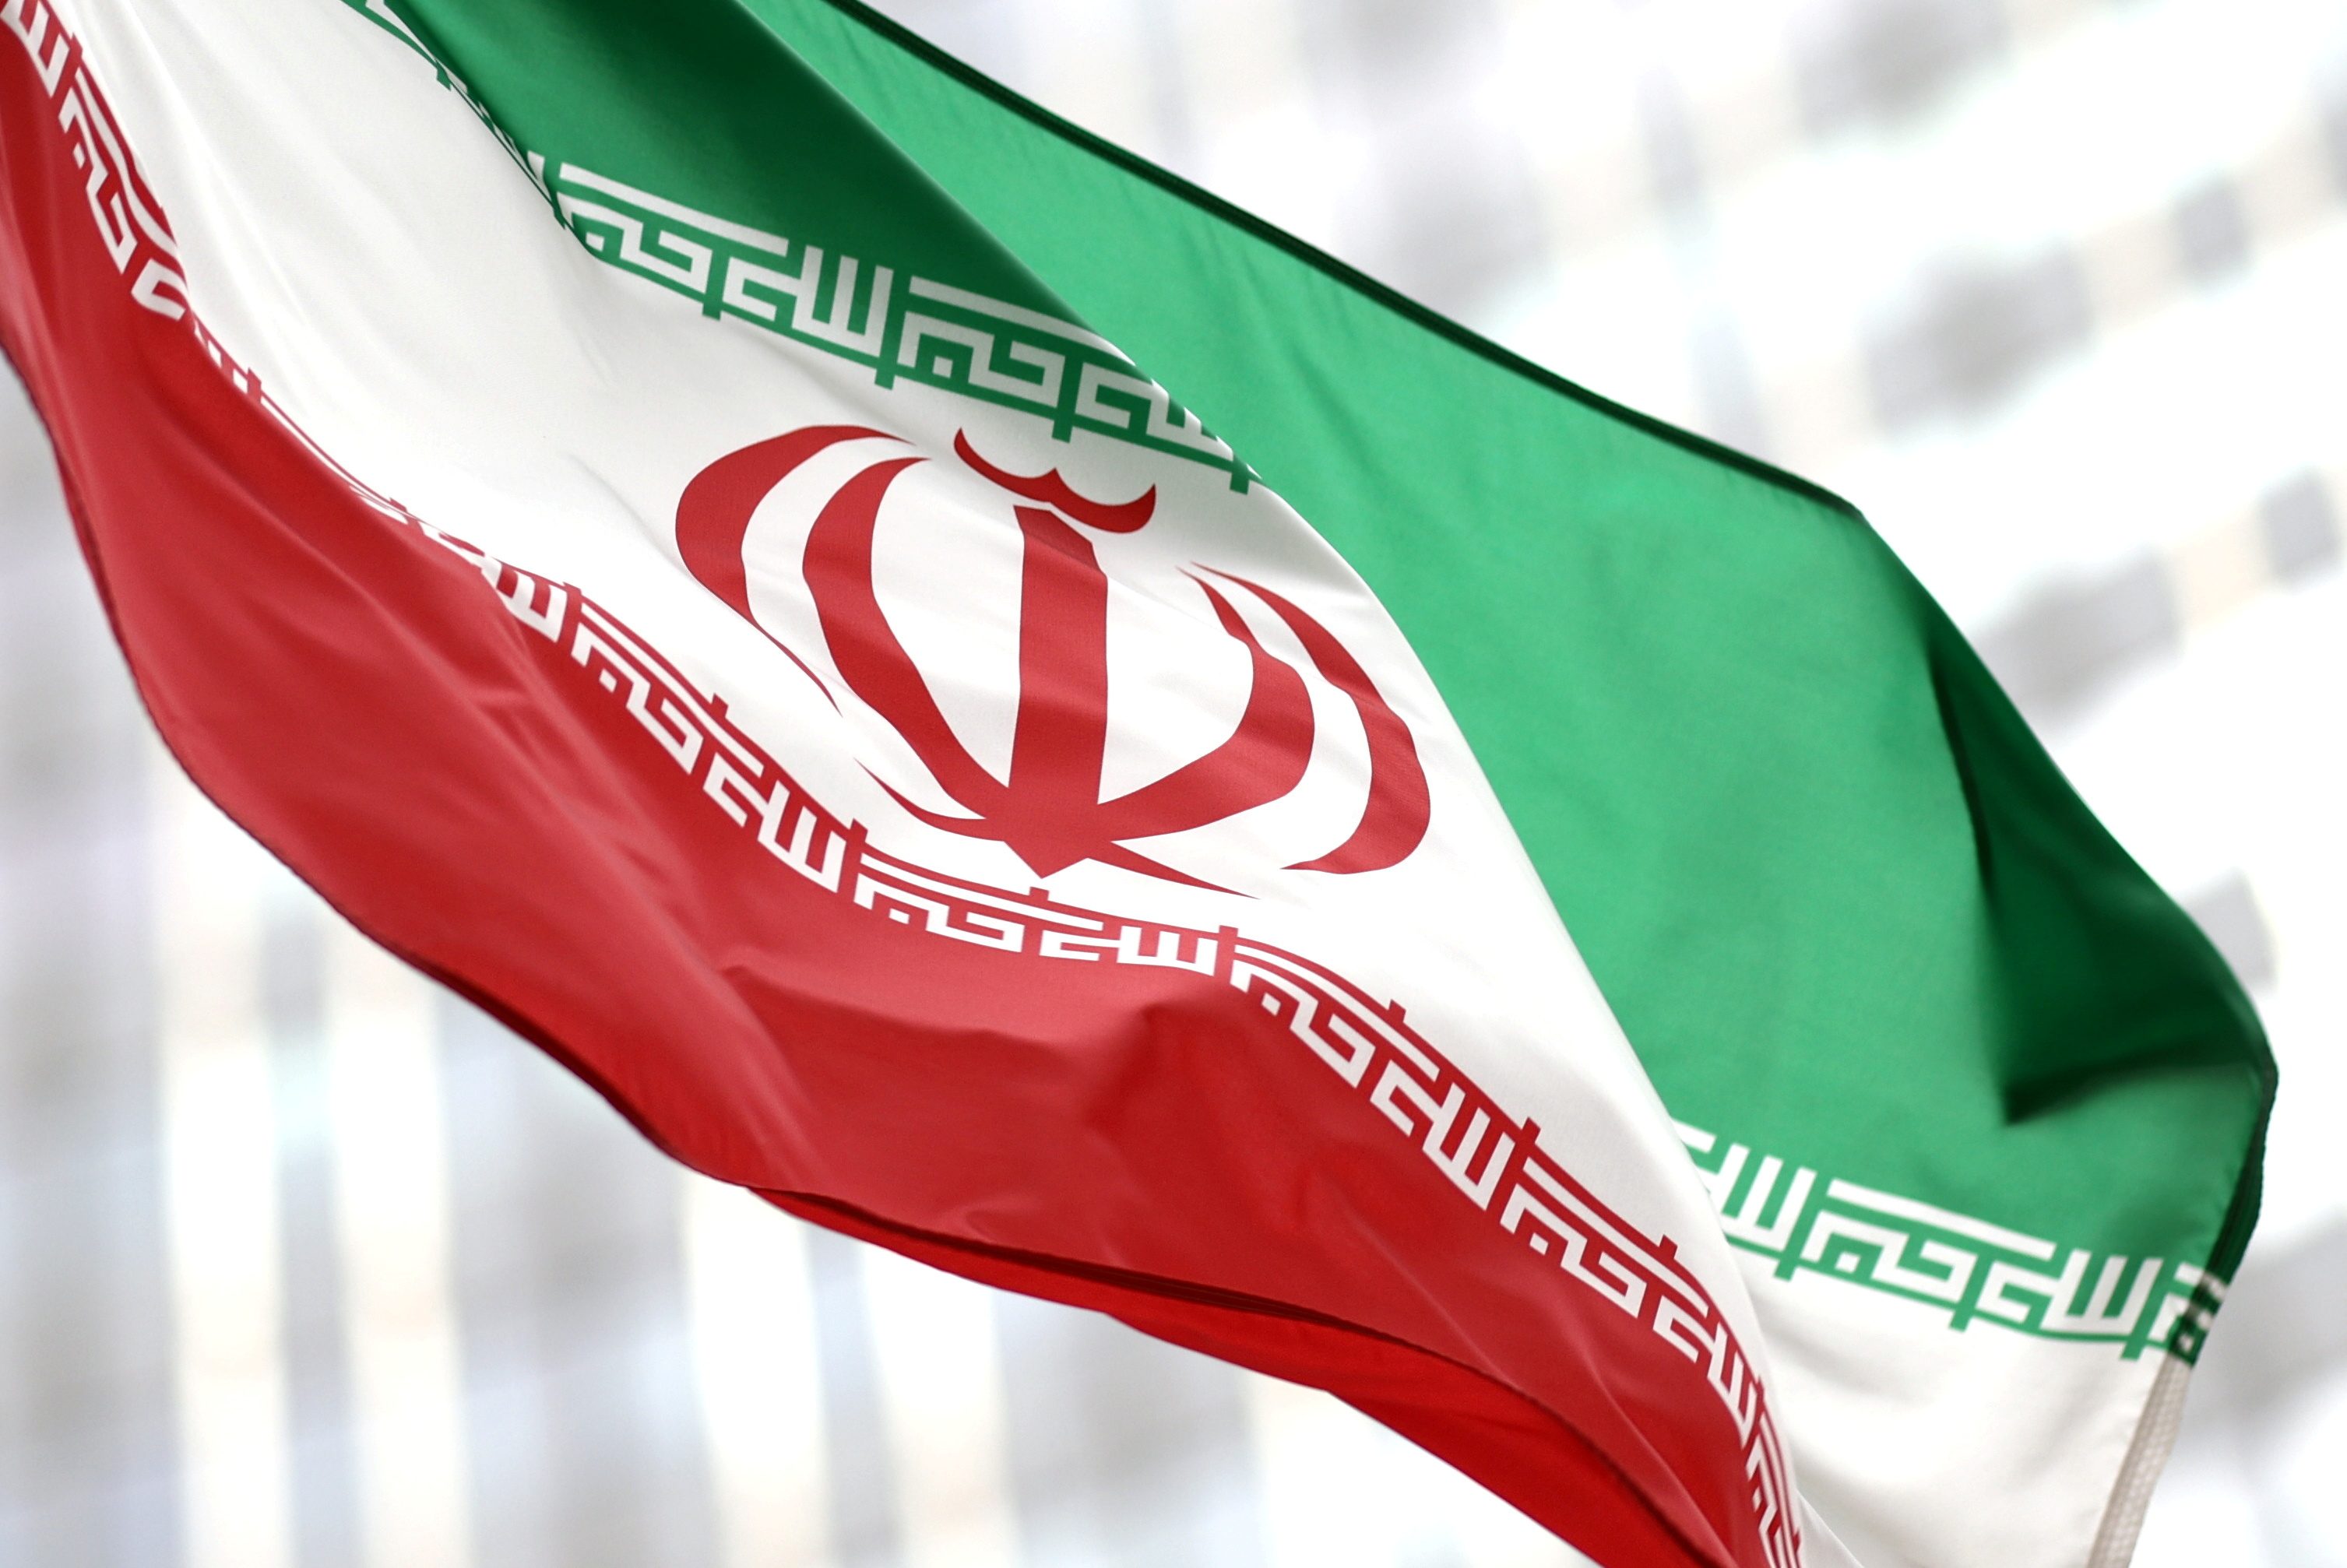 ‘Enemies’ triggering unrest in Iran to overthrow Islamic Republic – Khamenei